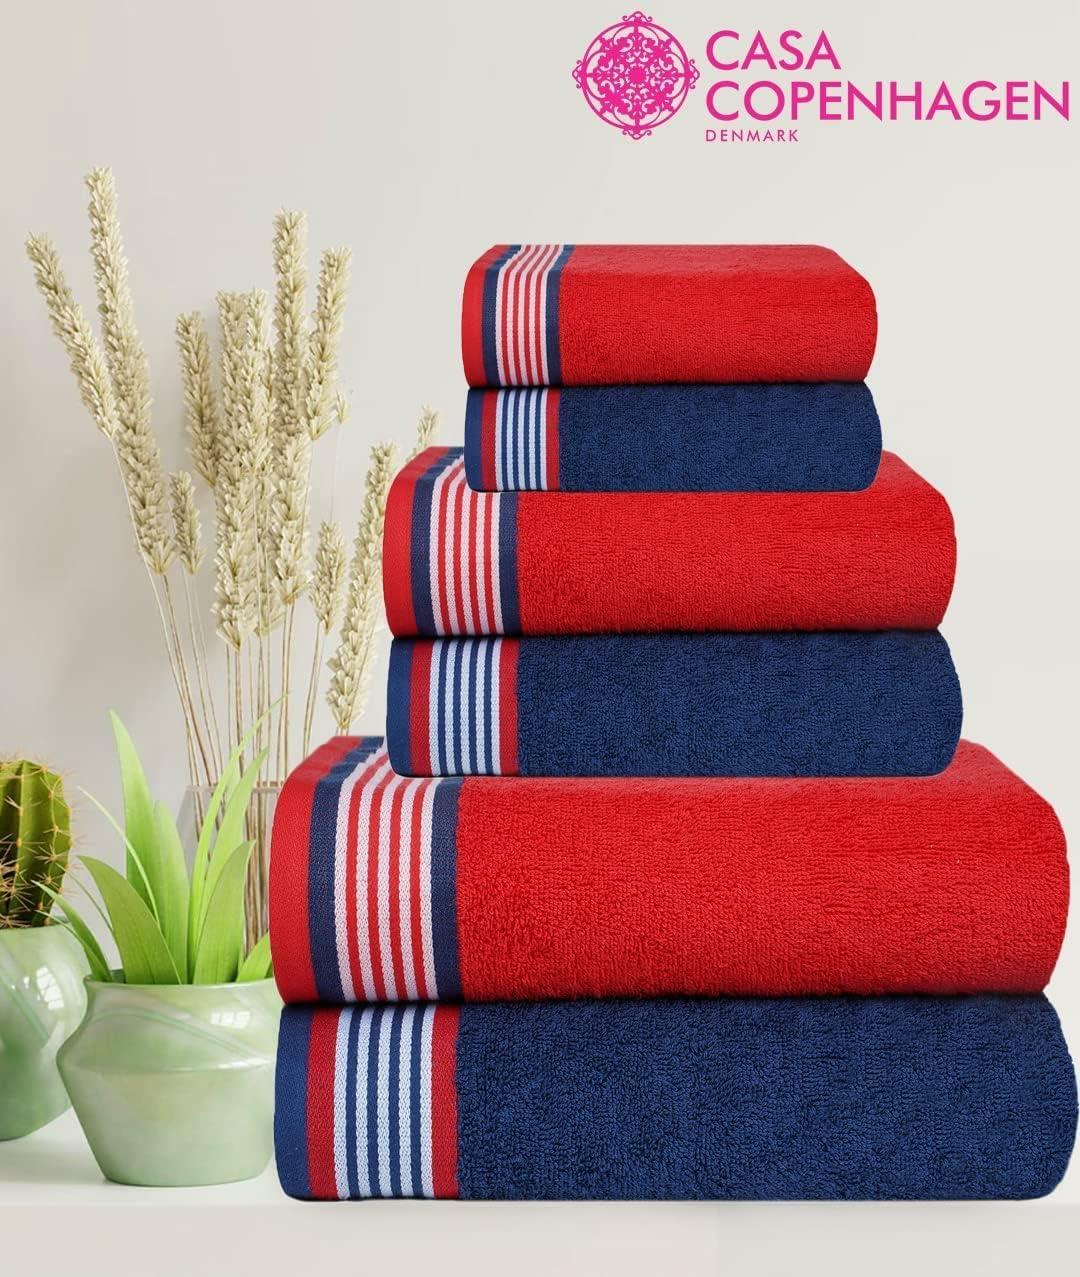 CASA COPENHAGEN Designed in Denmark 550 GSM 2 Large Bath Towels 2